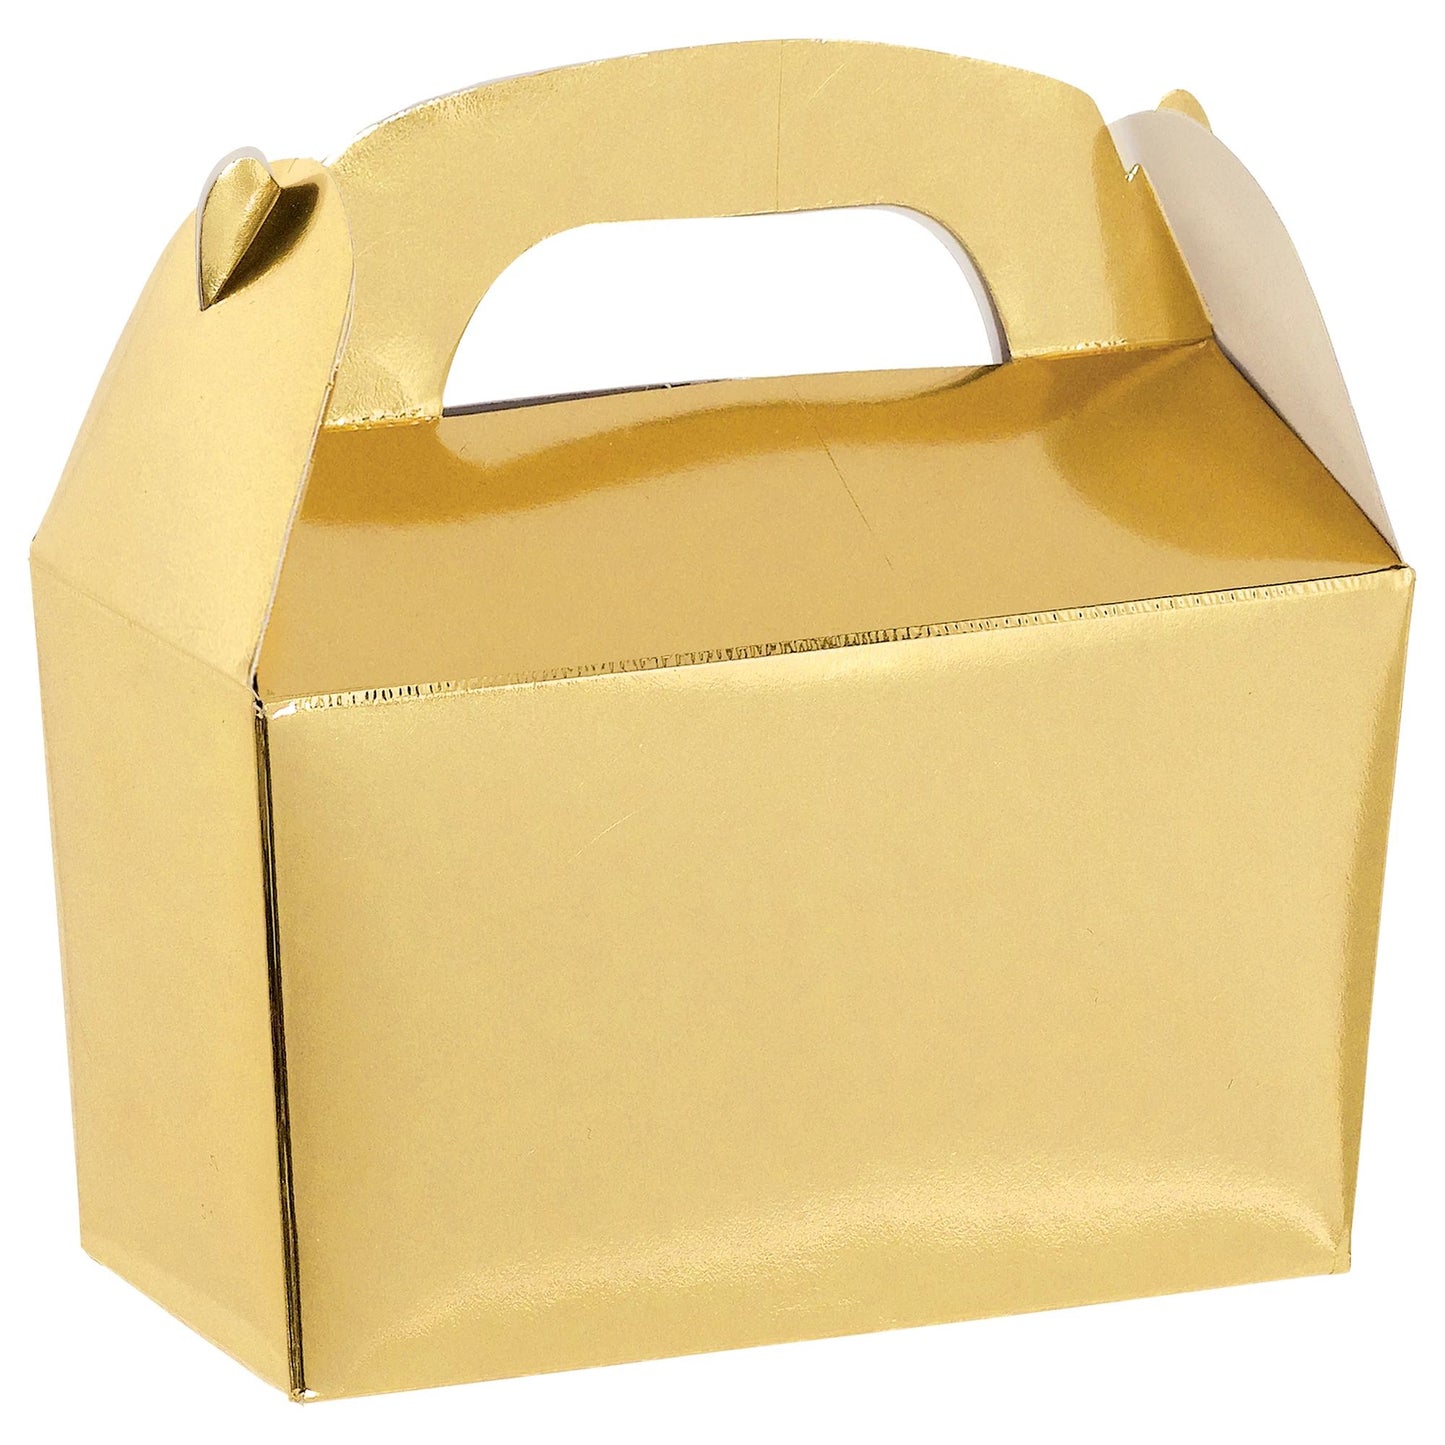 Gable Box- Gold